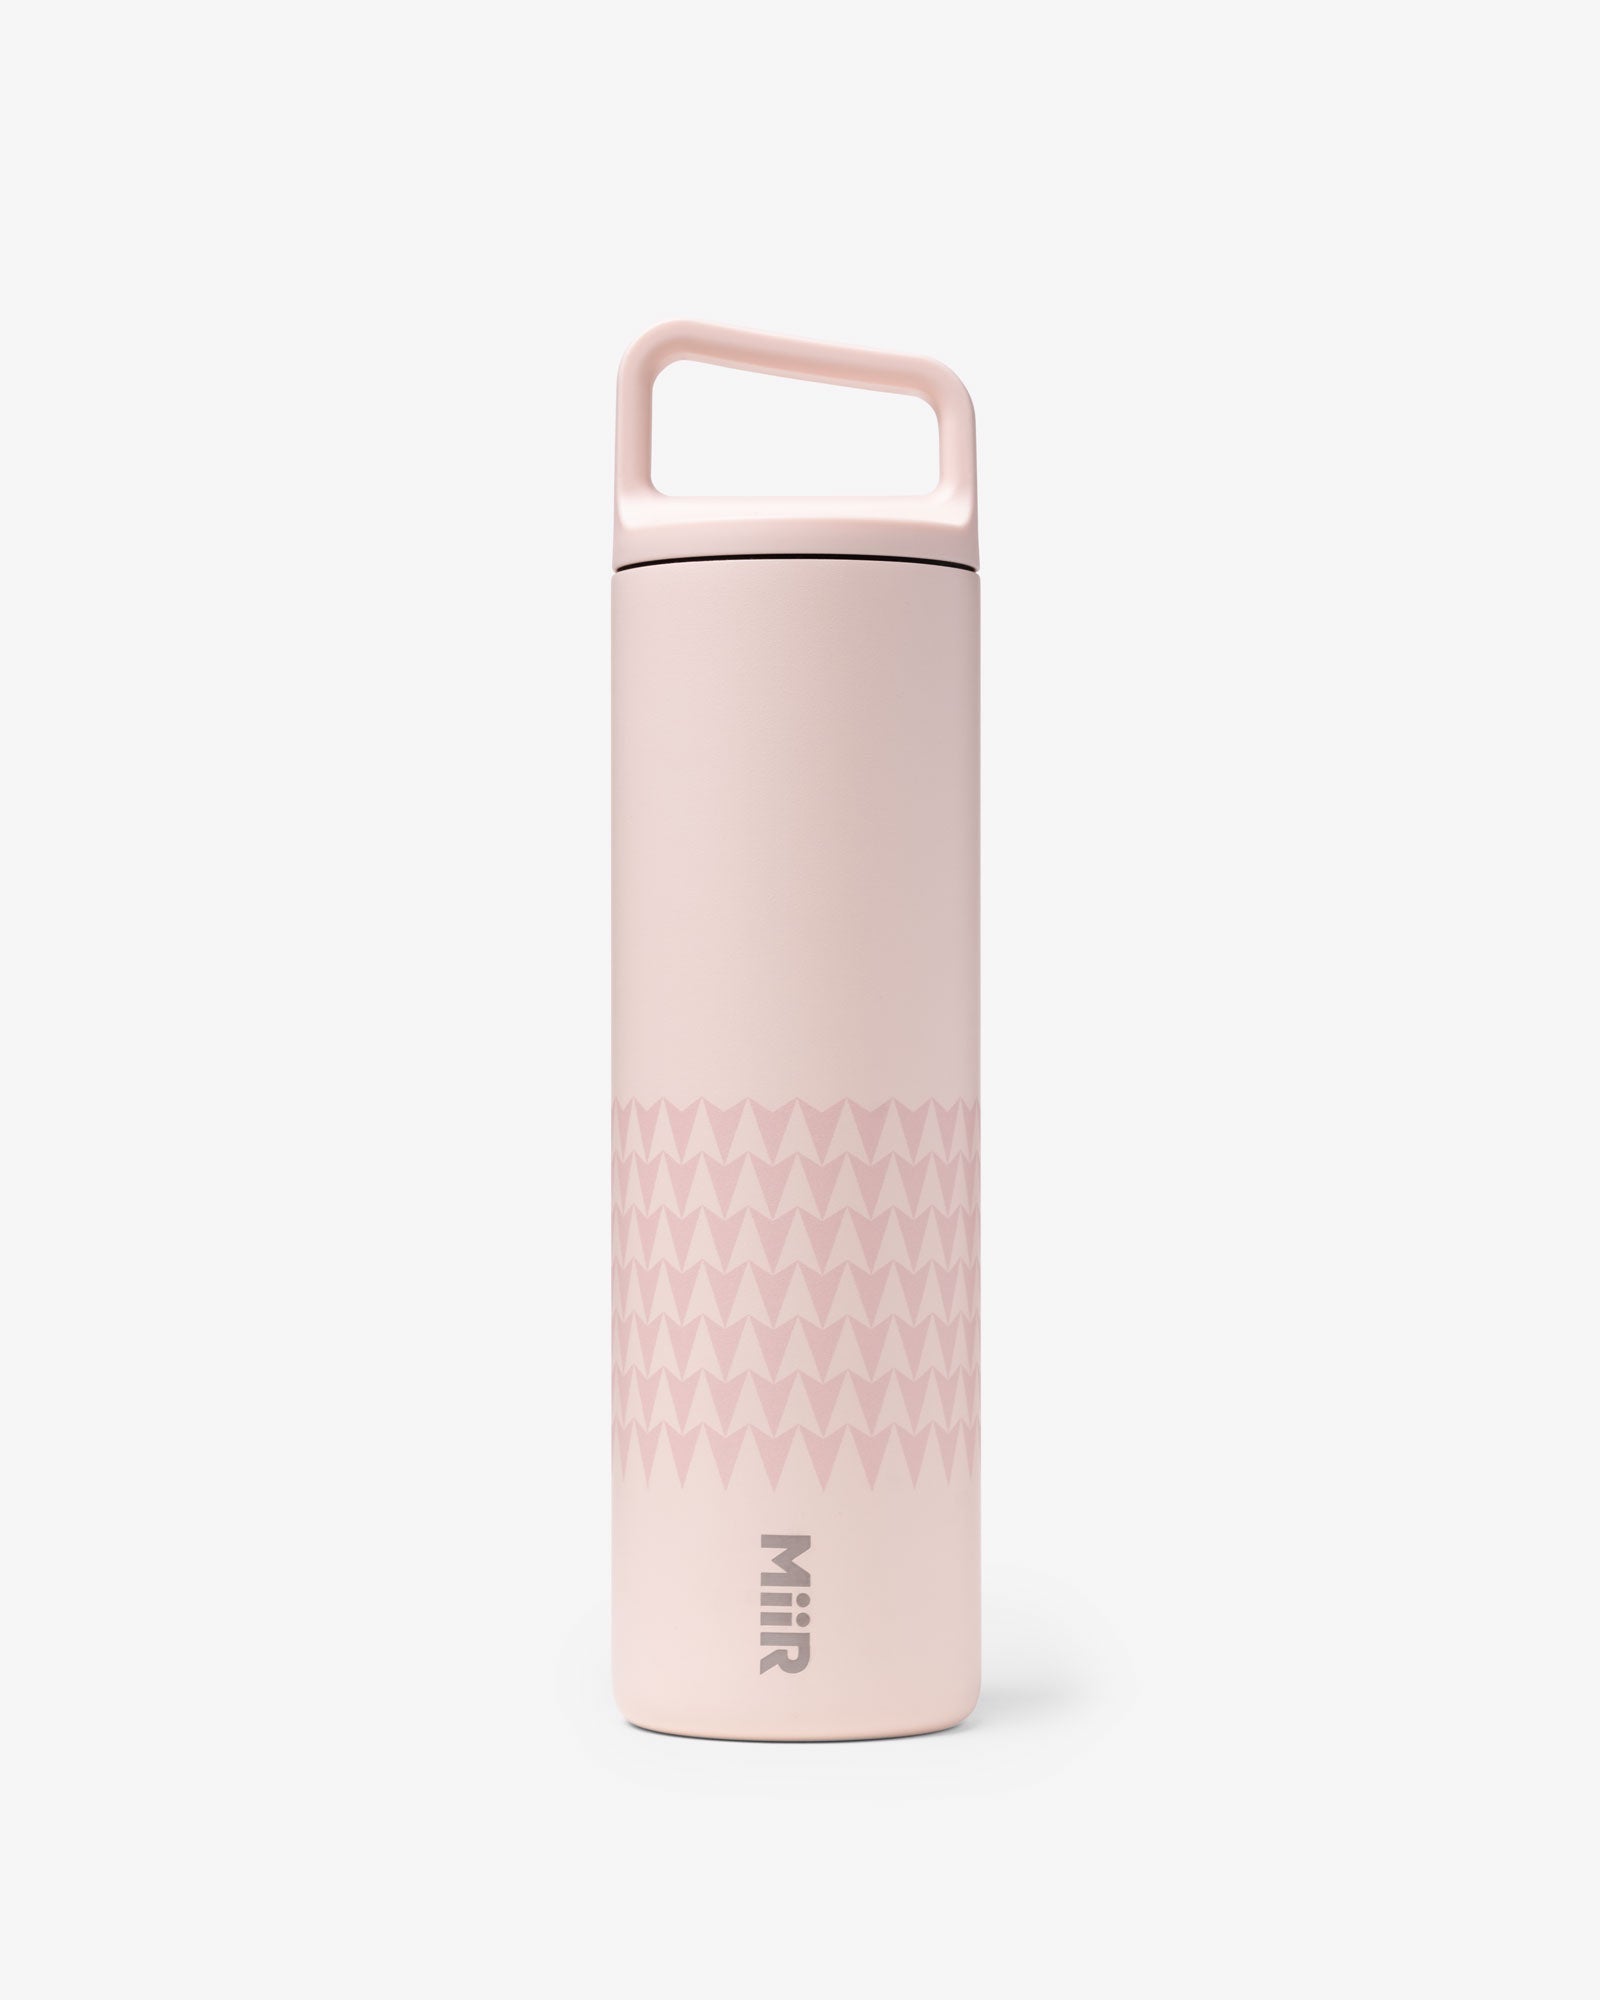 Topo Designs x MiiR Water Bottle